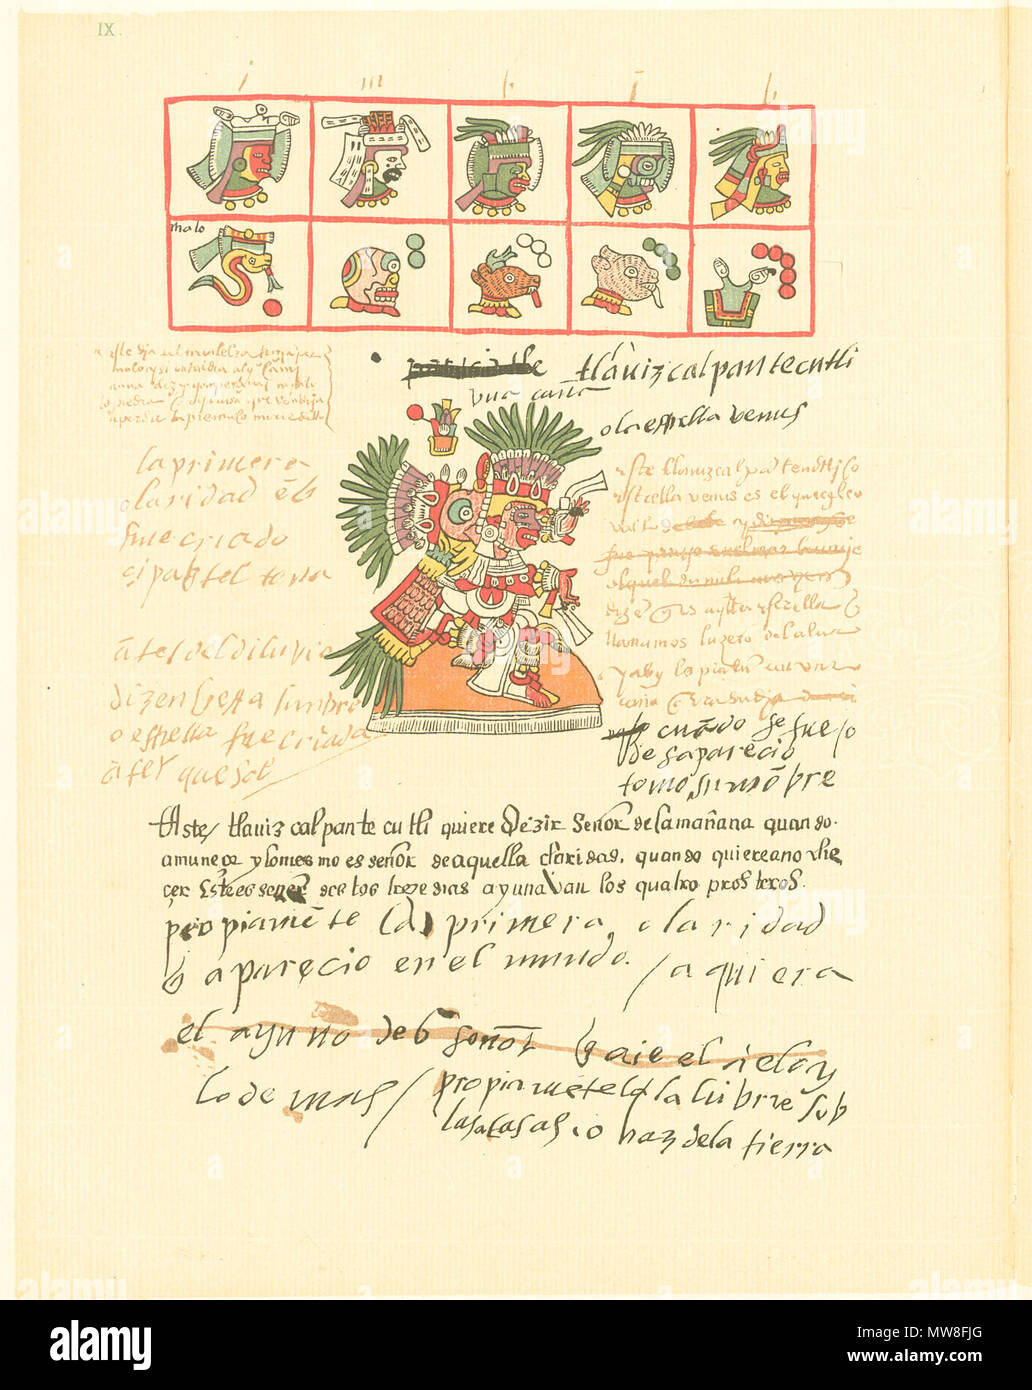 English: Codex Telleriano-Remensis, Folio 14v (Loubat edition